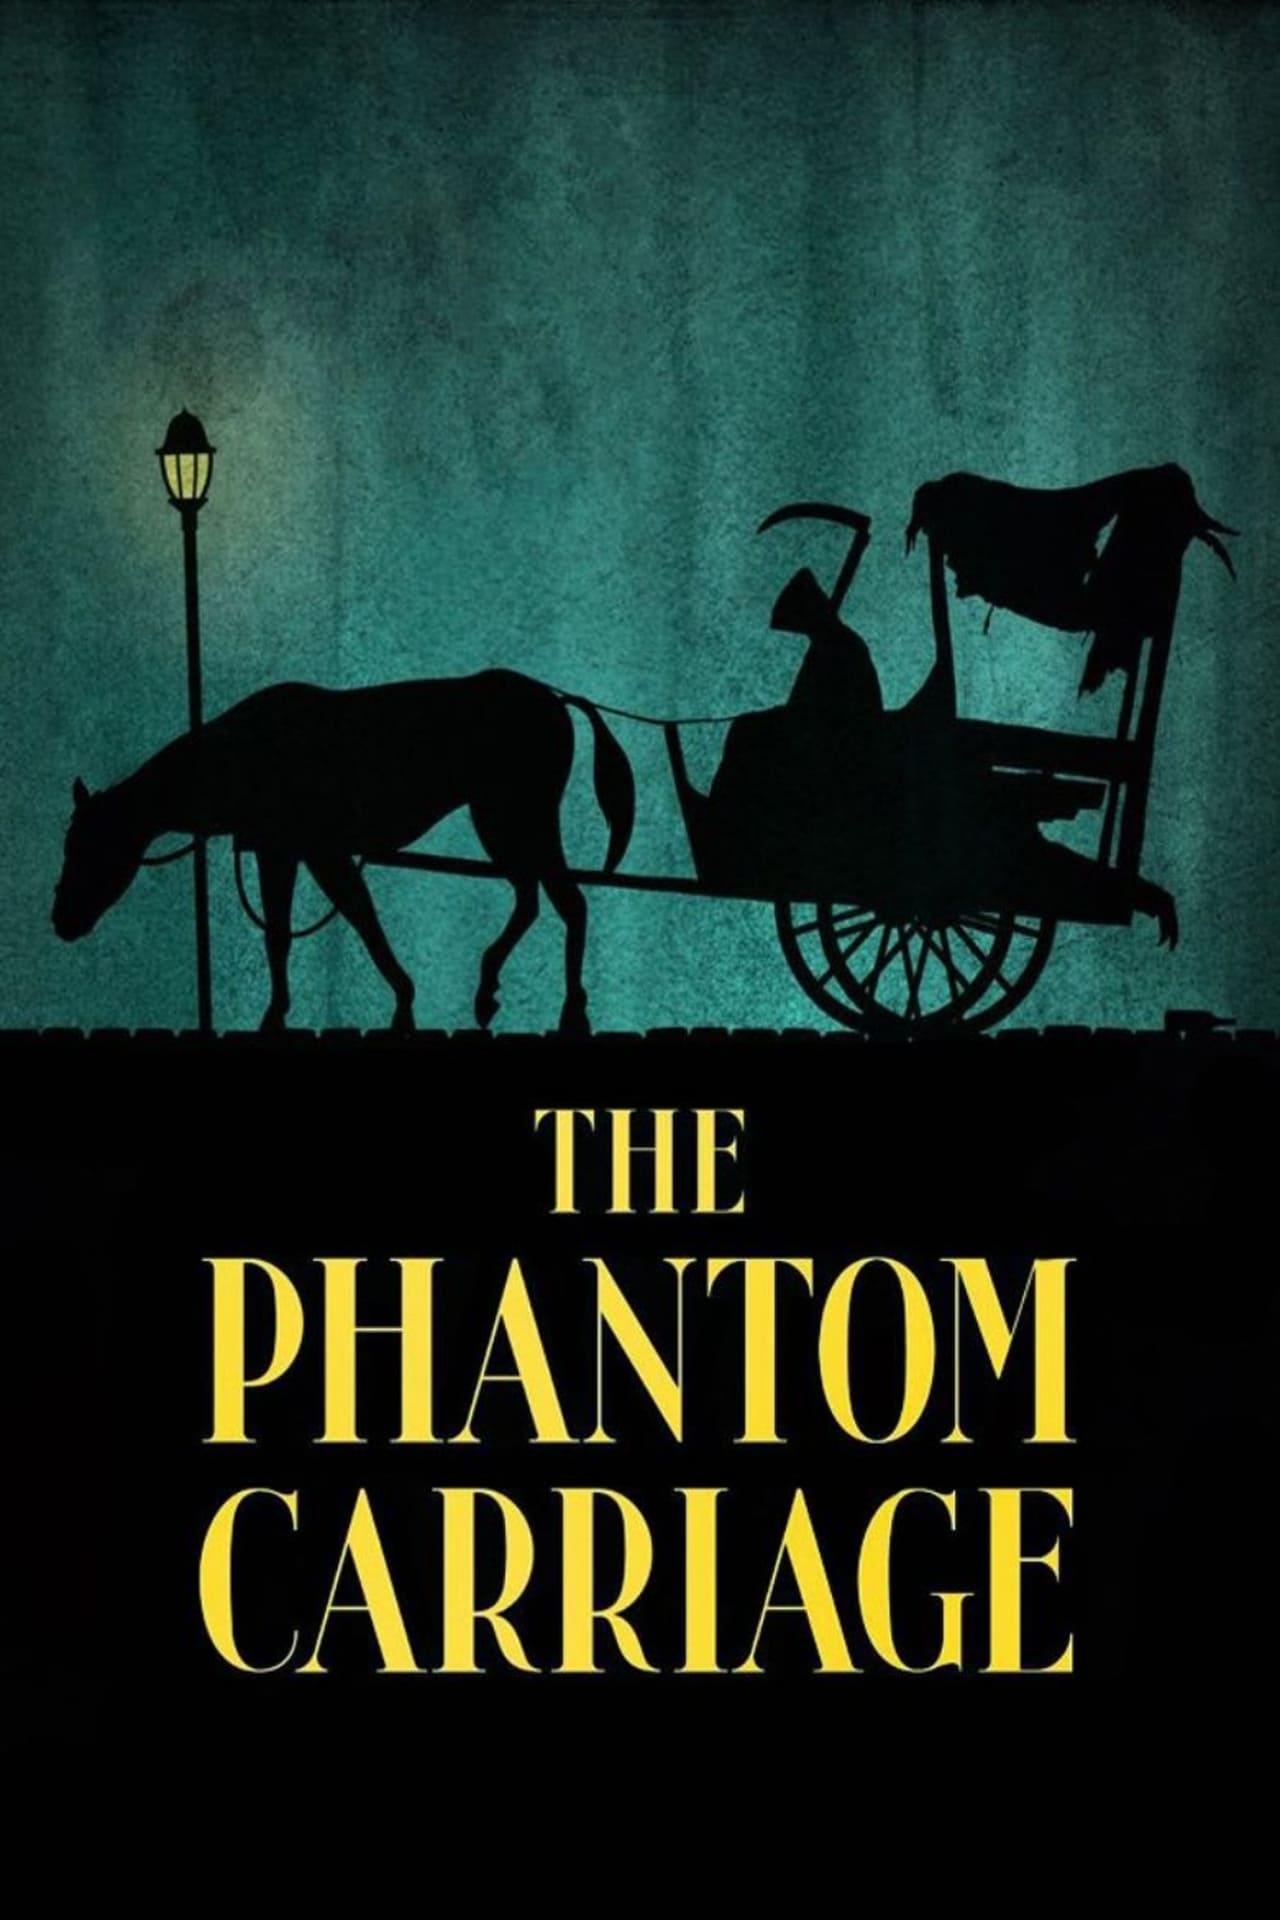 The Phantom Carriage poster